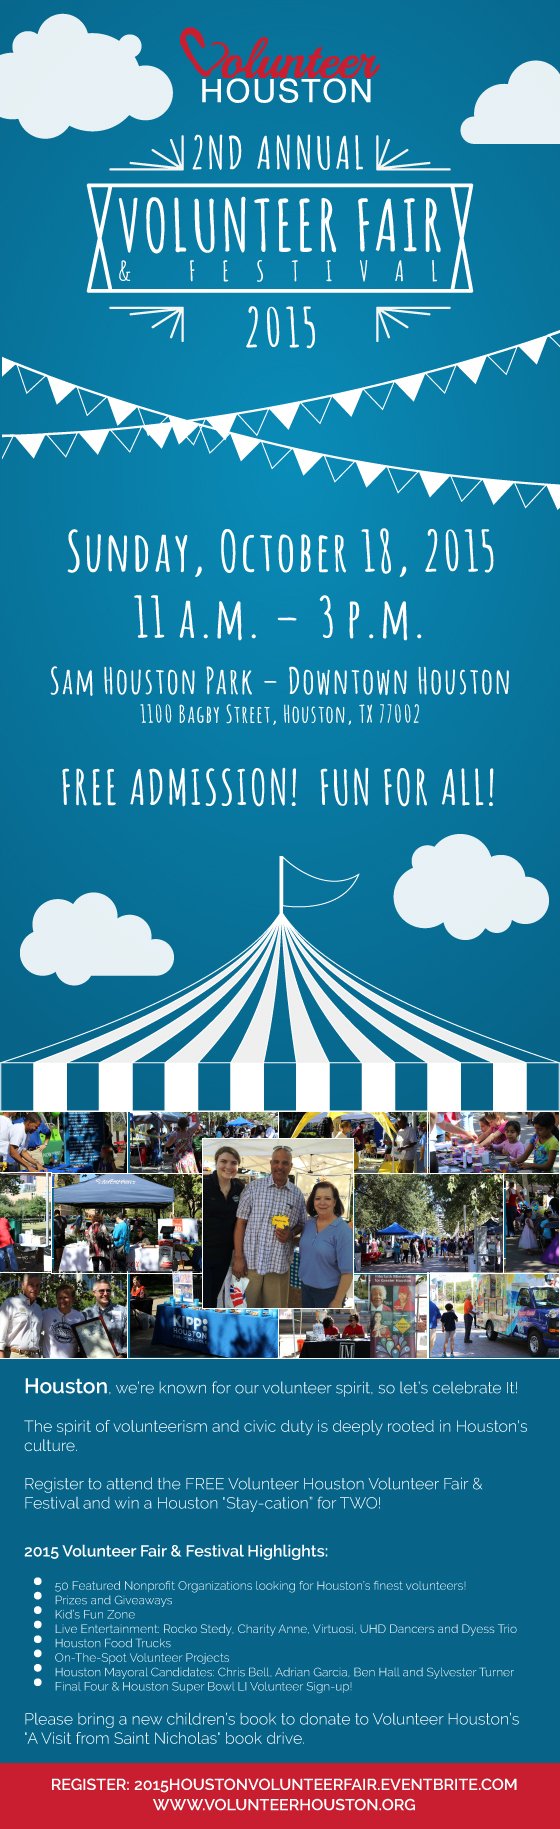 2nd Annual Volunteer Houston Volunteer Fair & Festival on Sunday, Oct